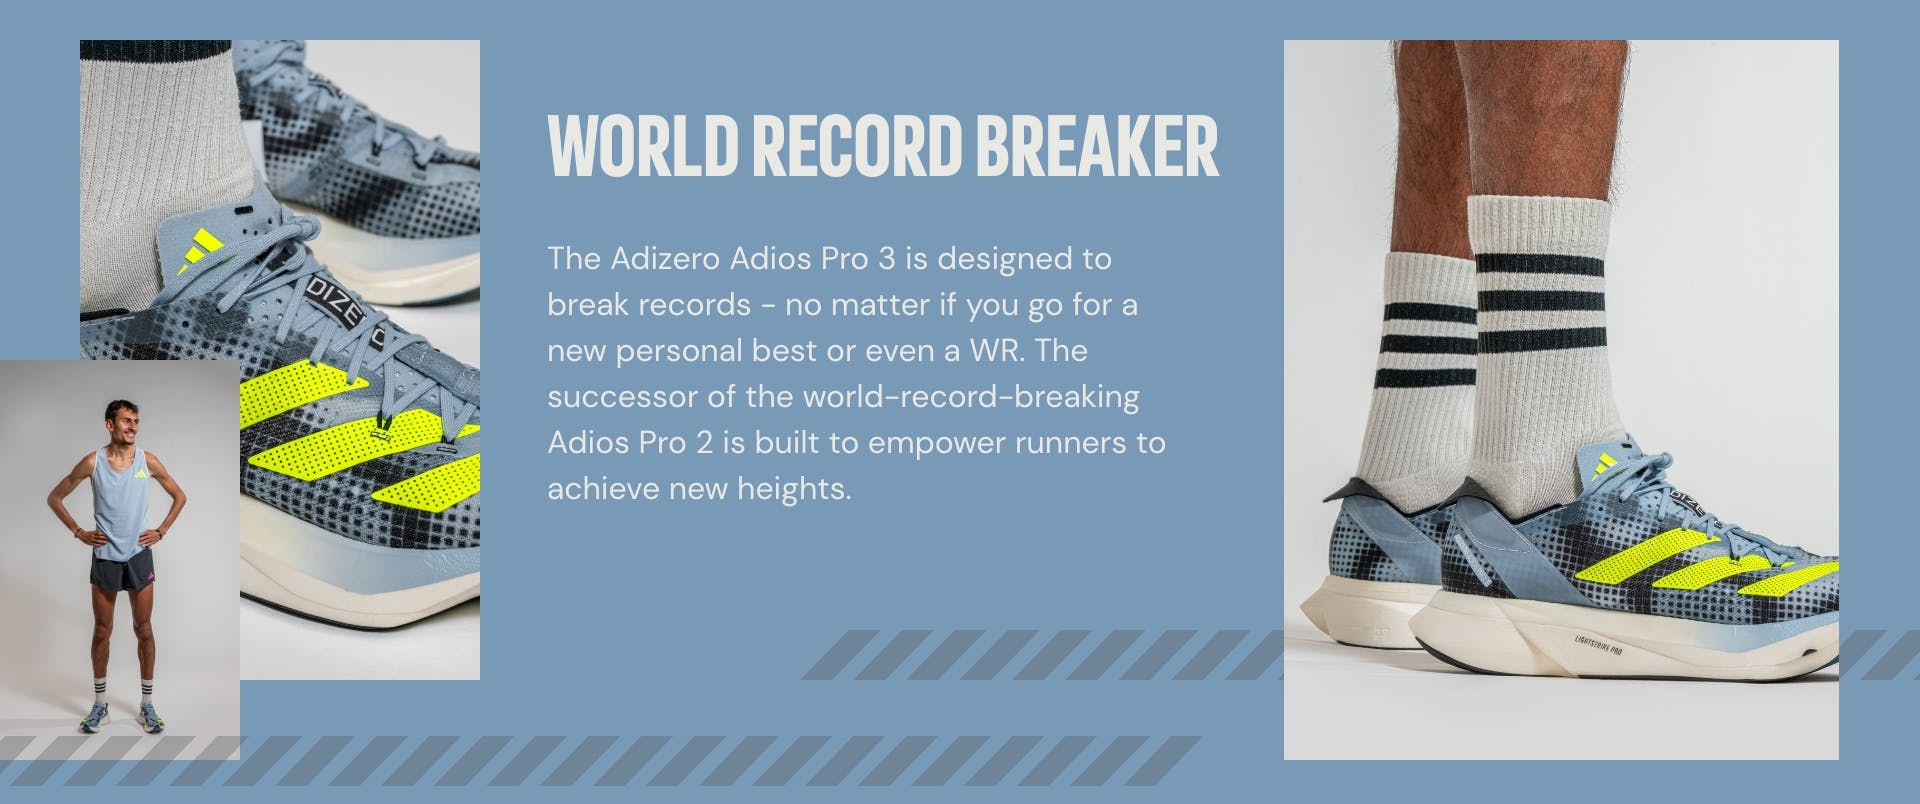 World Record Breaker